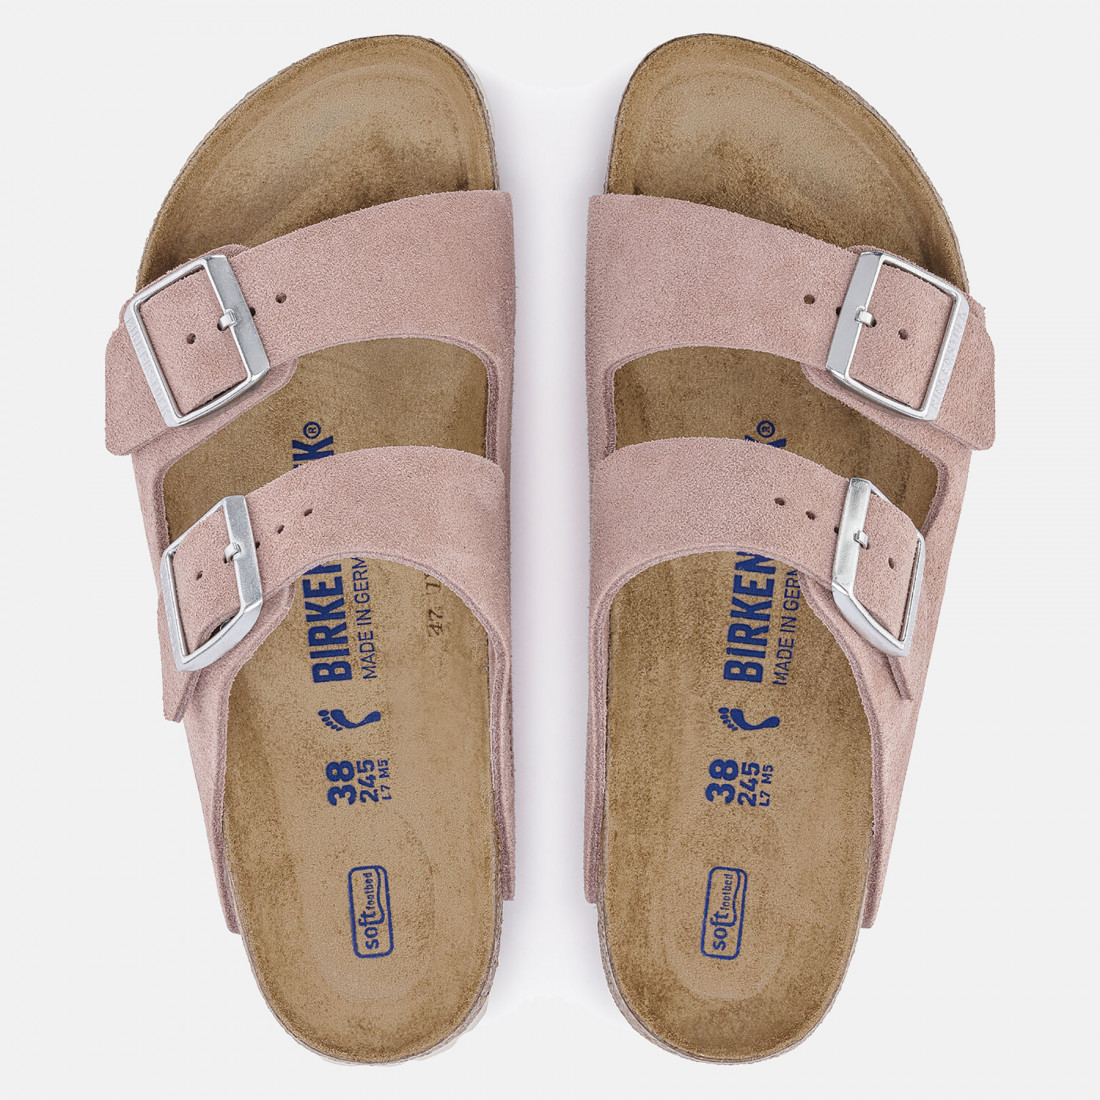 Birkenstock women's sandal in pink suede